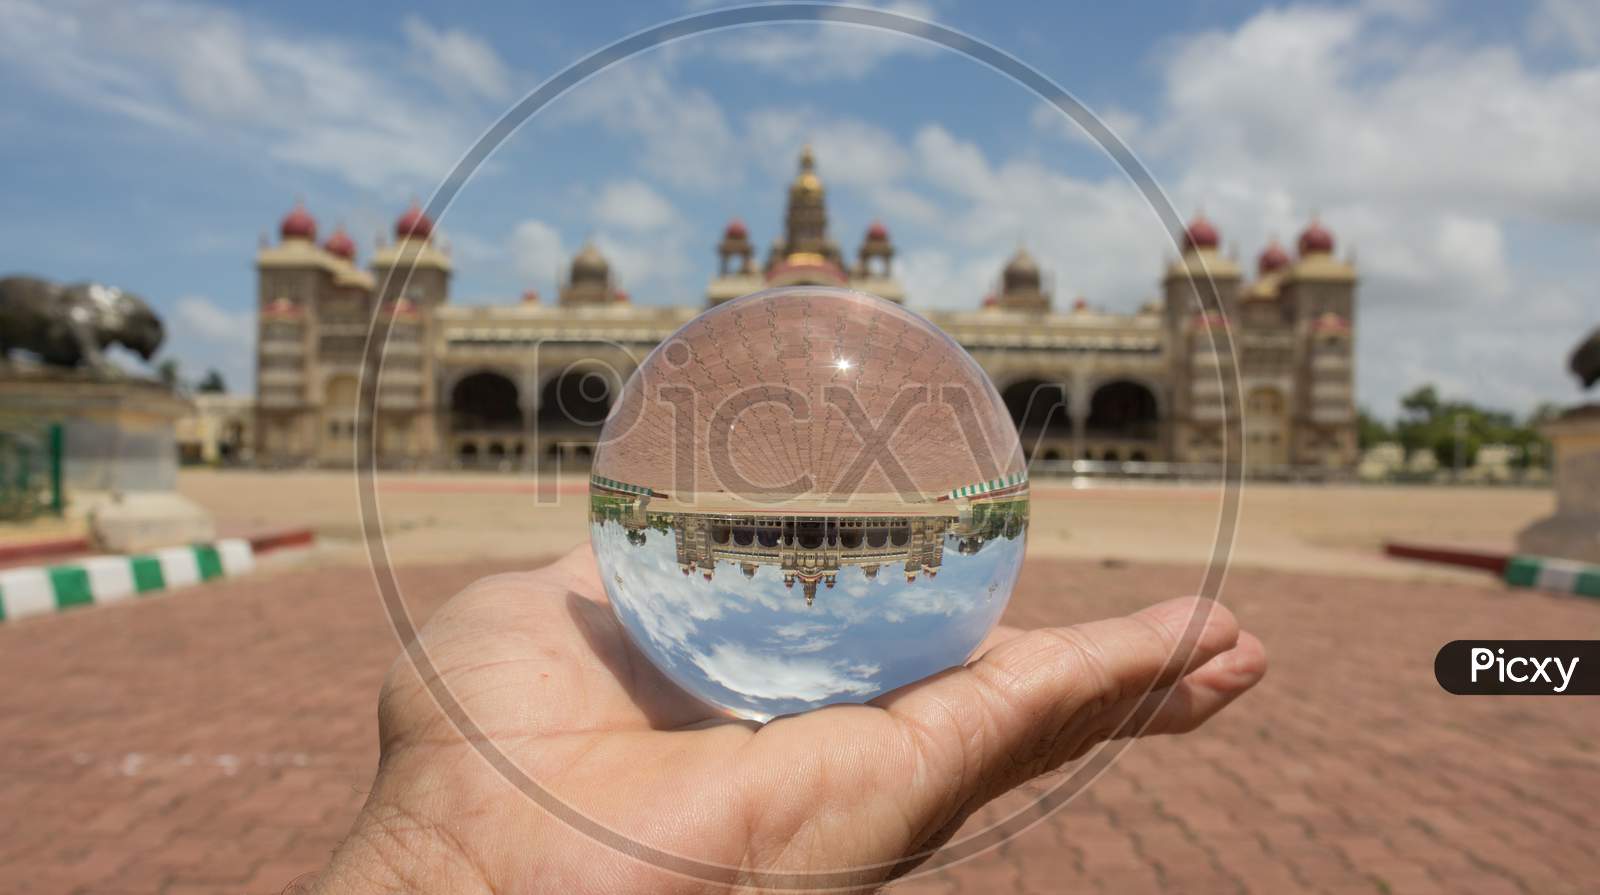 The crystal ball view of the Ambavilas Palace in Mysore/Karnataka/India.